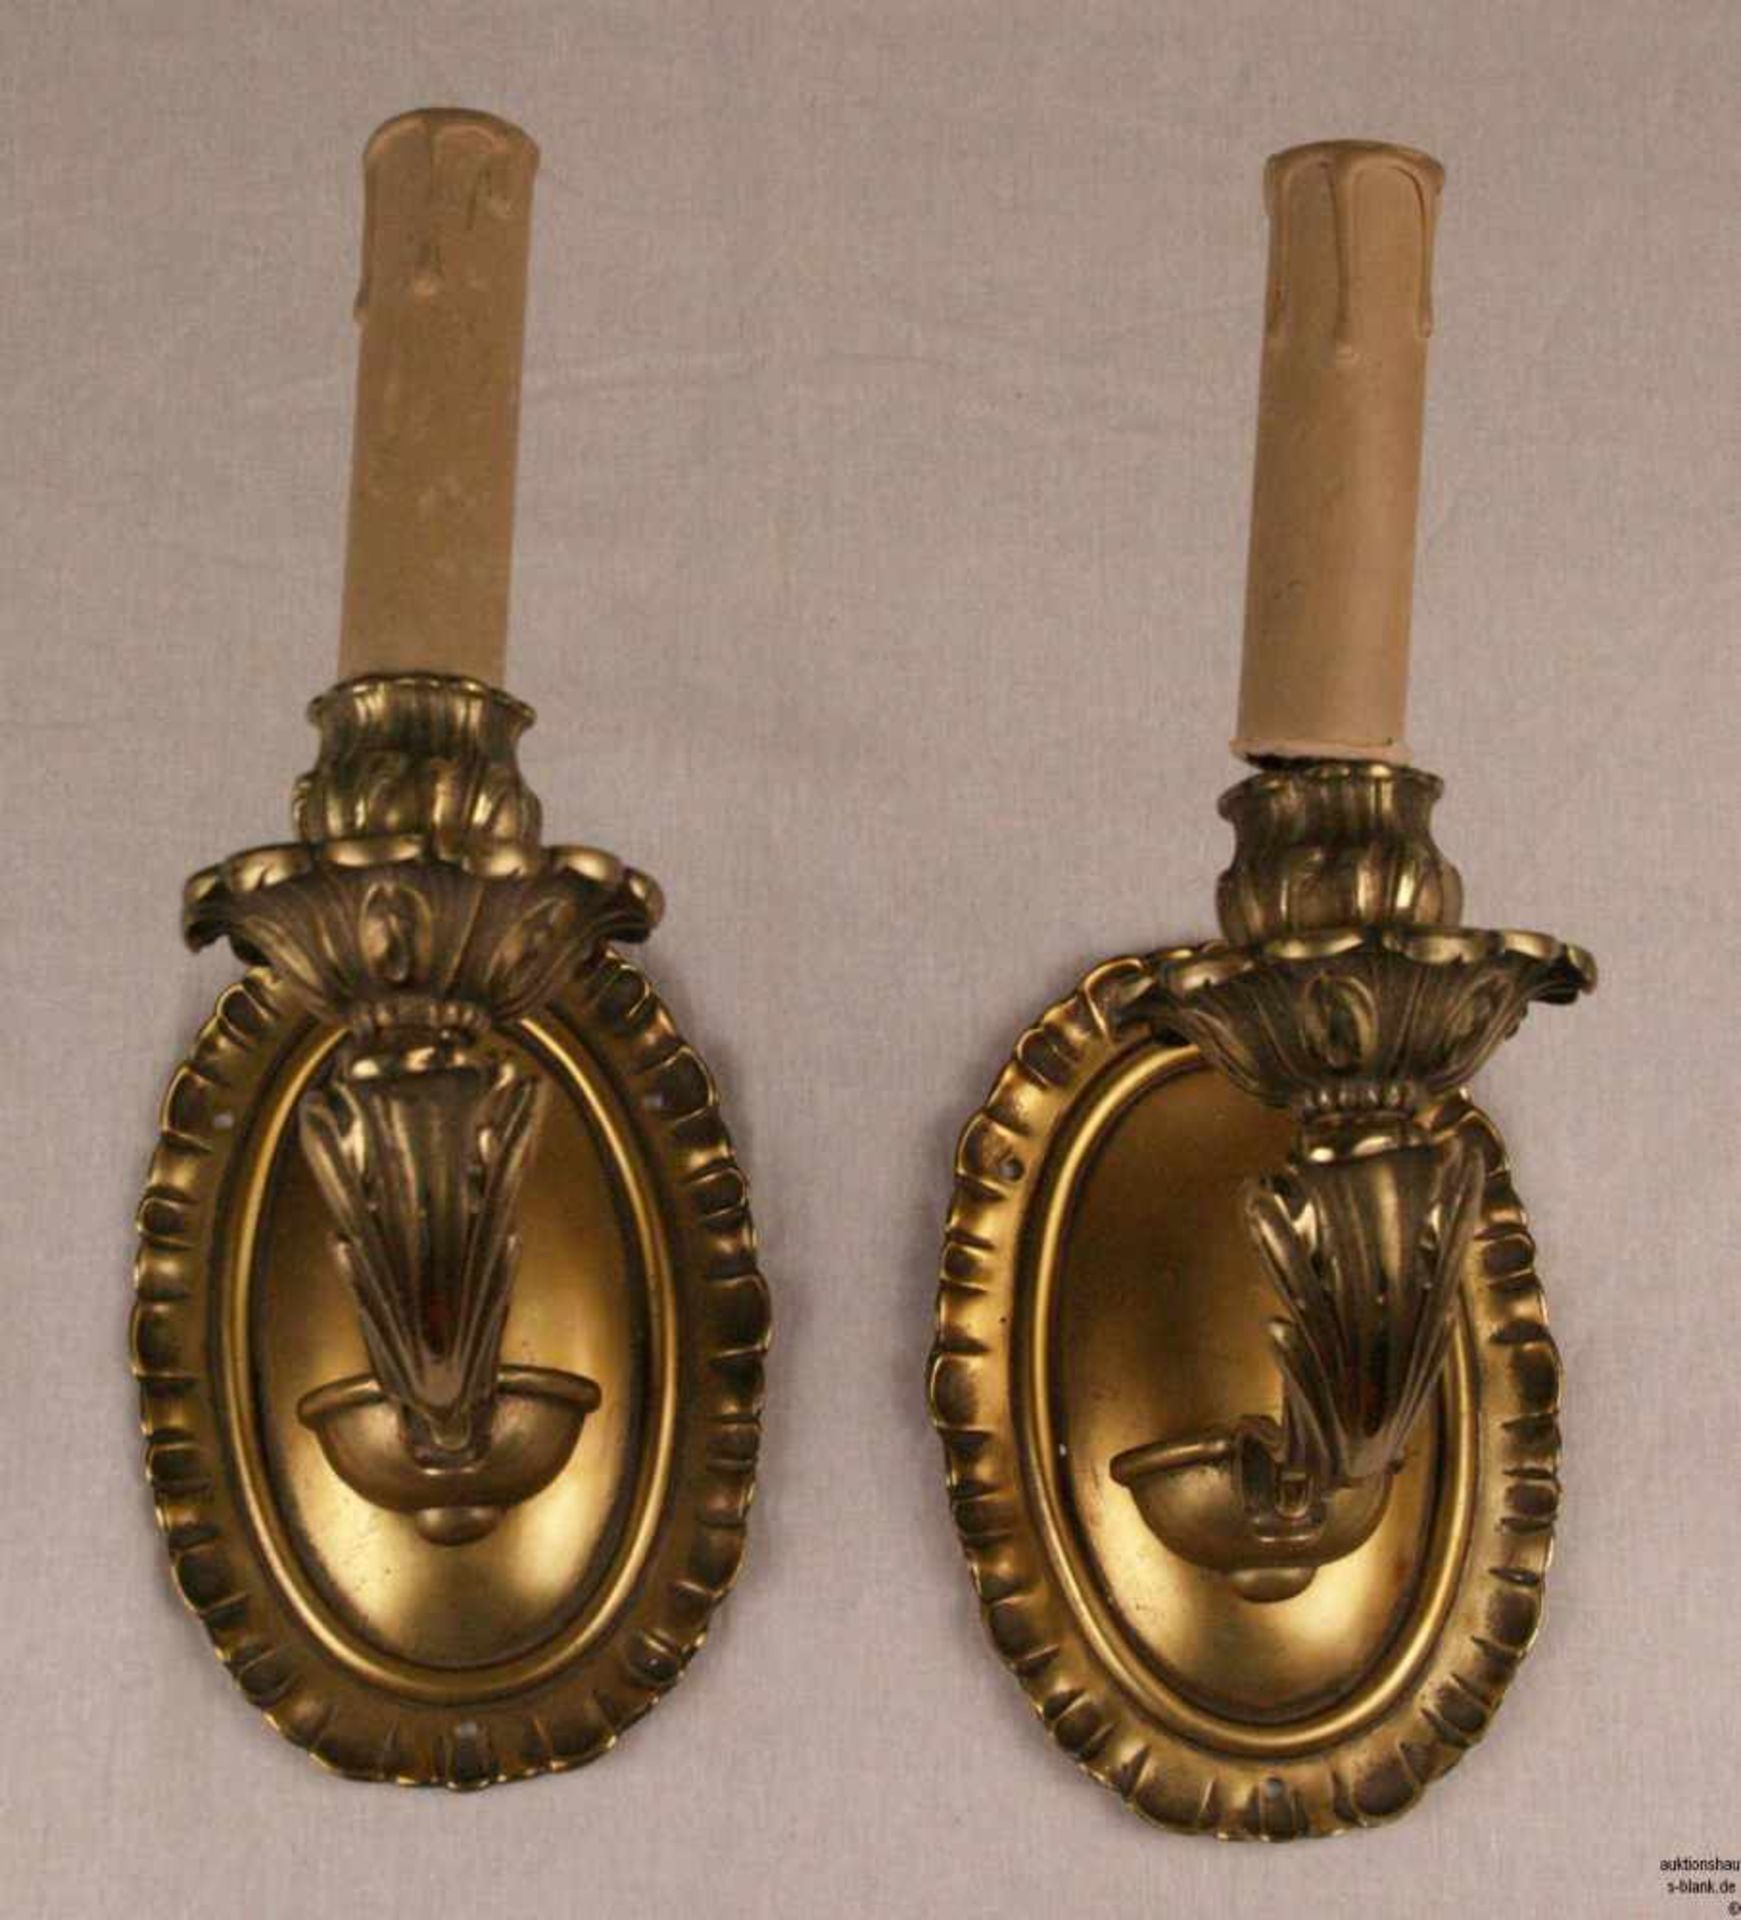 Zwei Wandleuchter - Messing, ovale Wandappliken mit geschwungenem Leuchterarm und vasenförmiger